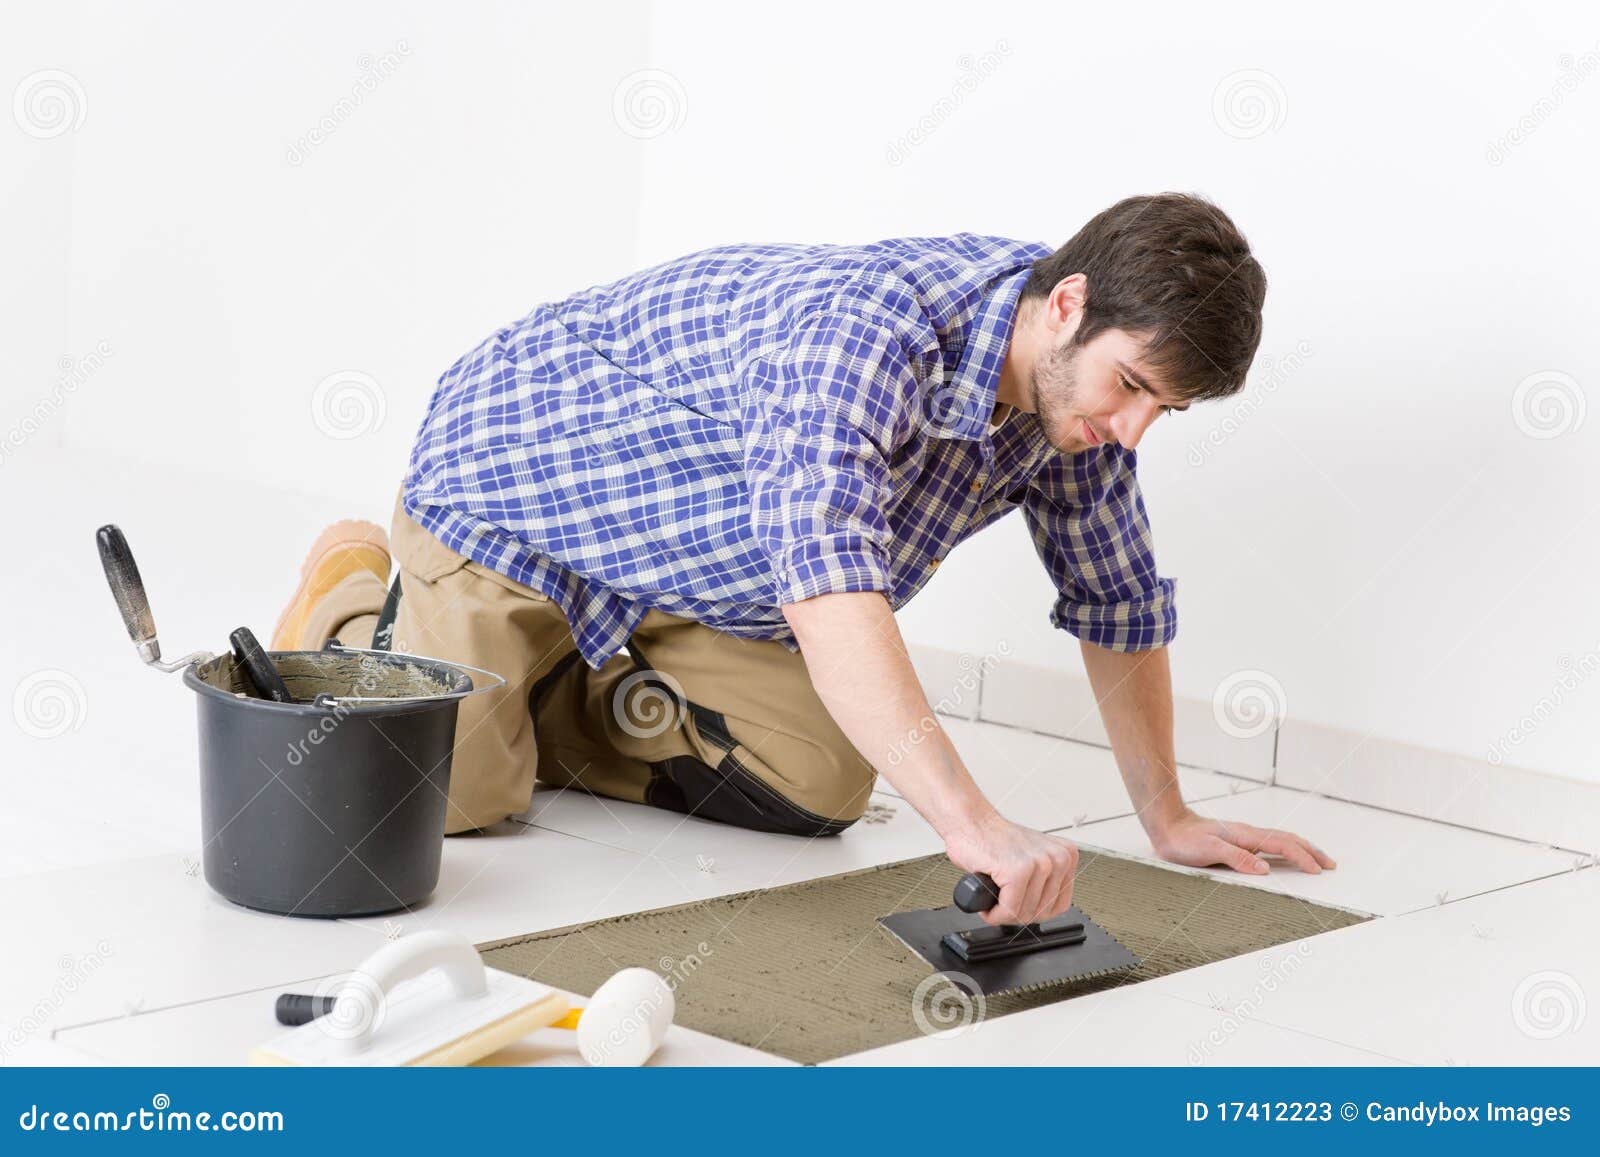 home improvement - handyman laying tile